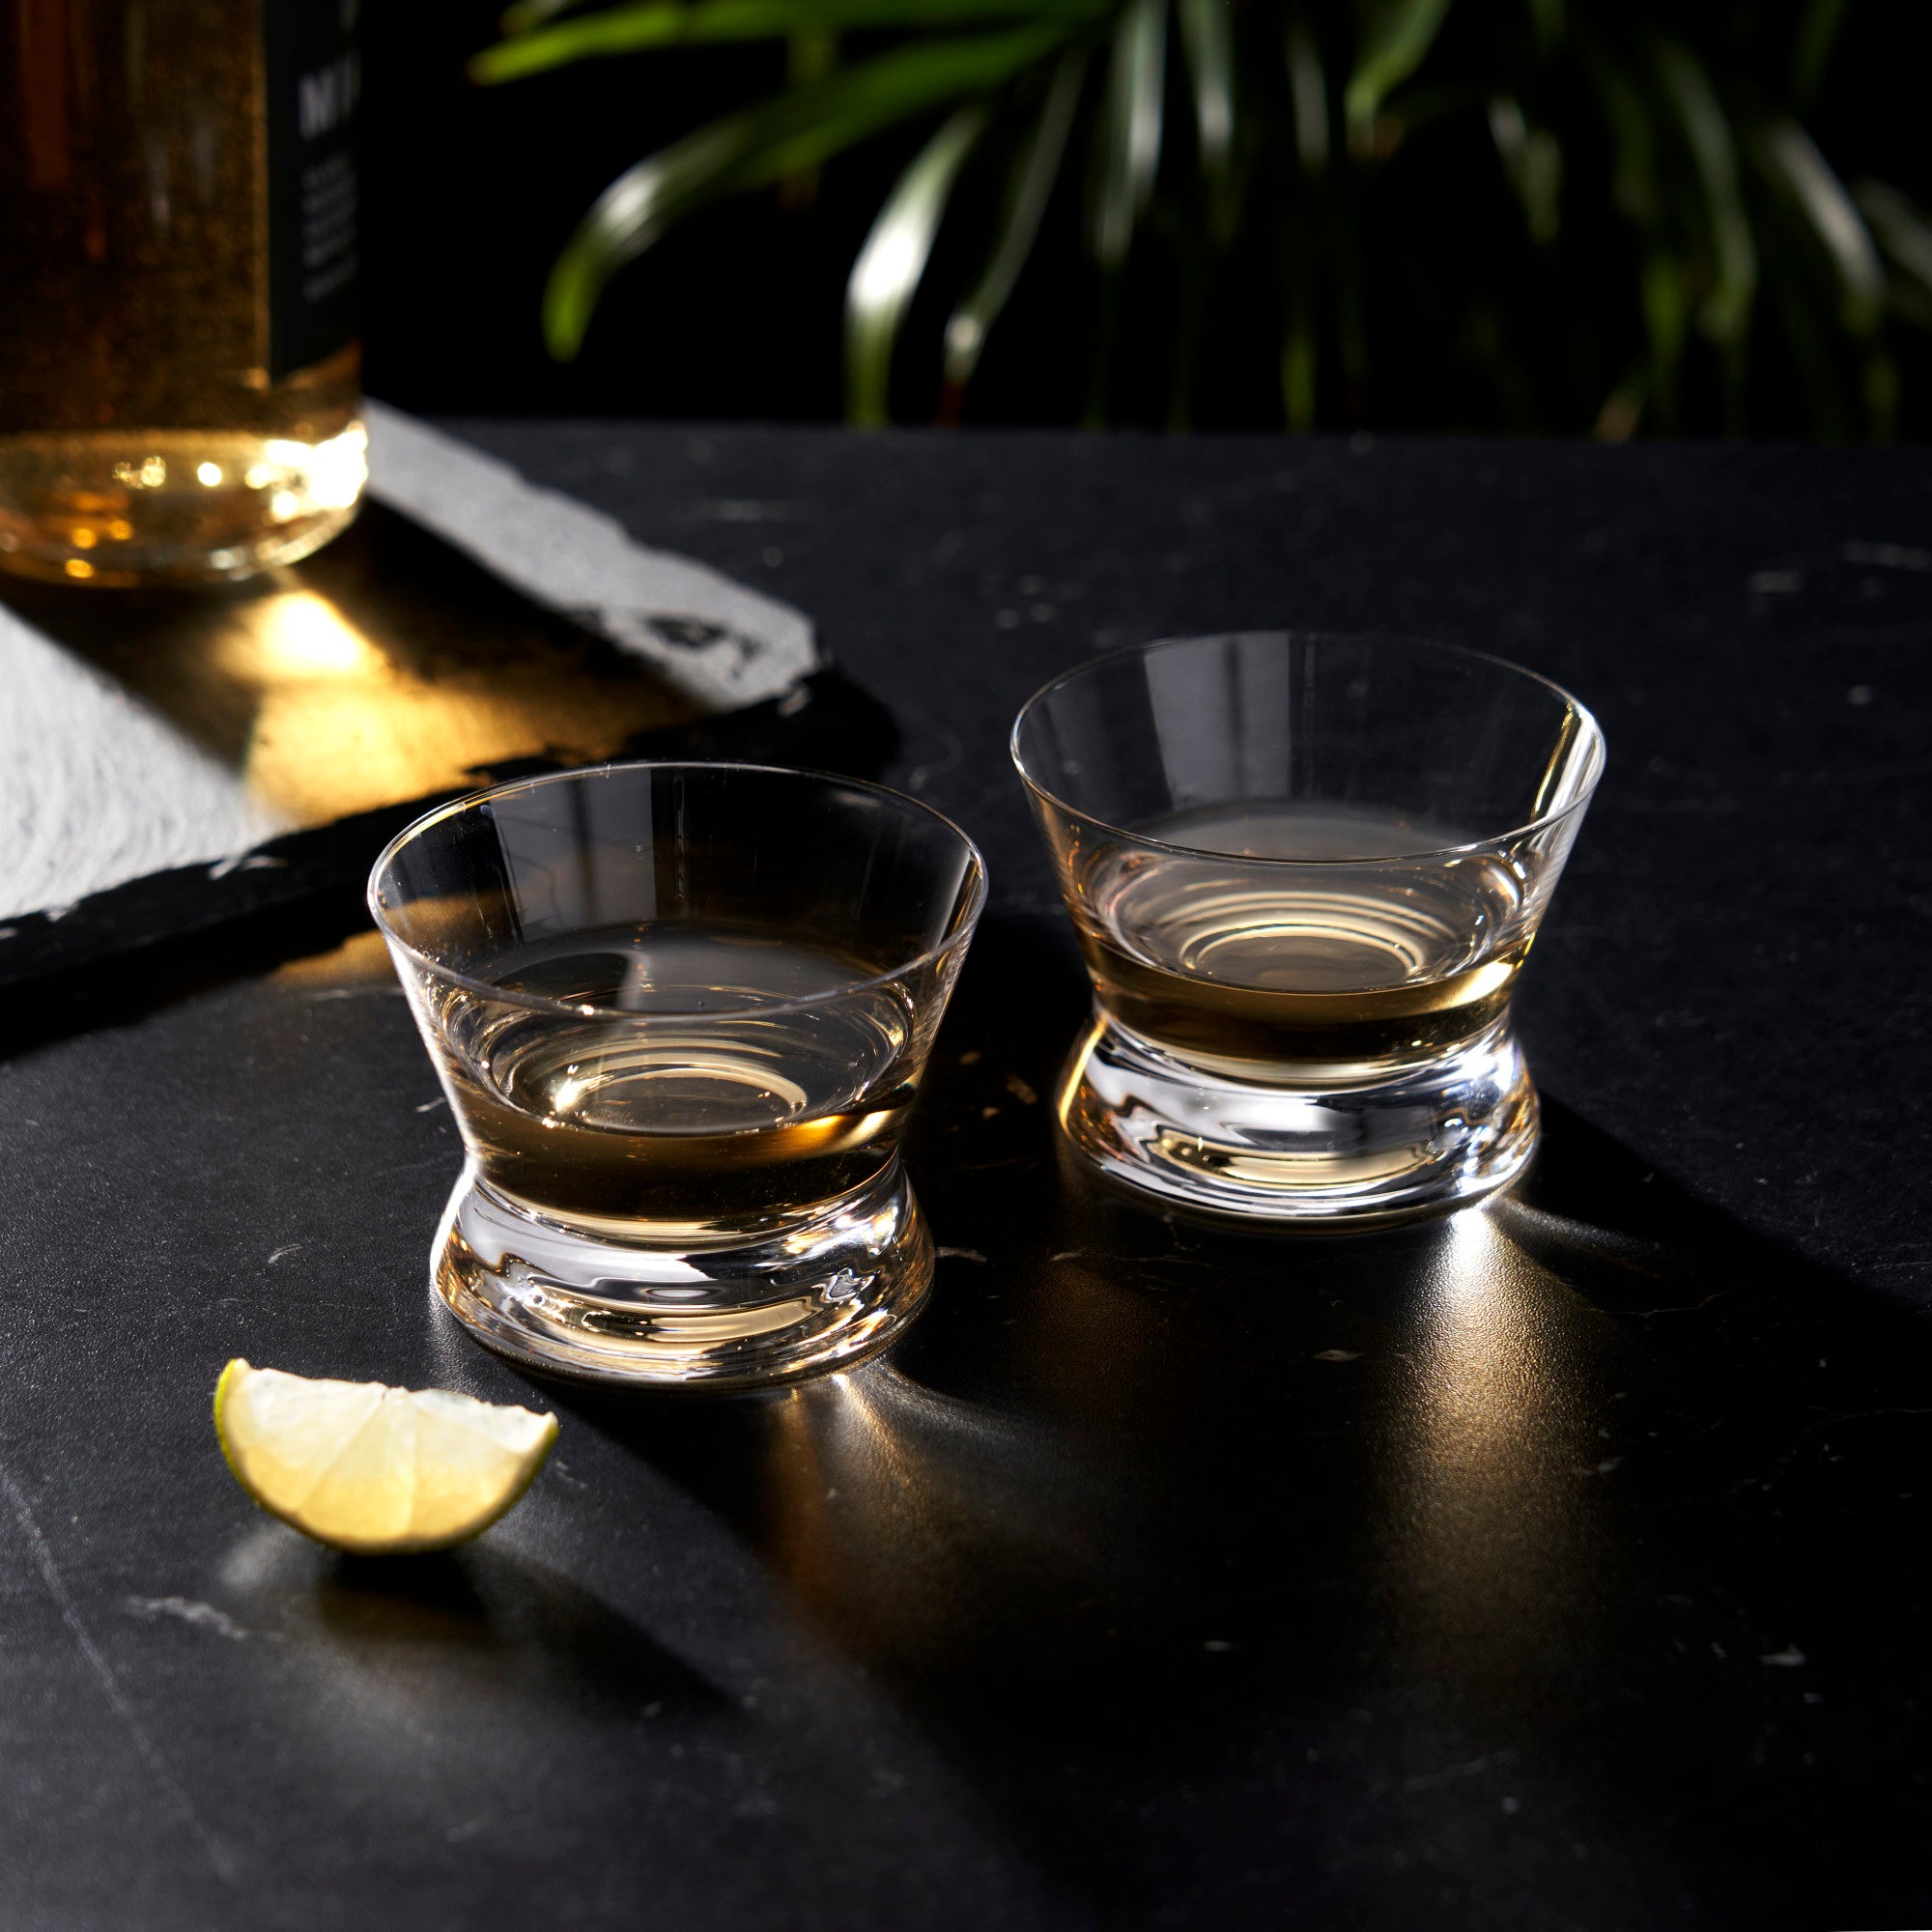 Tequila Tasting Glasses by Viski